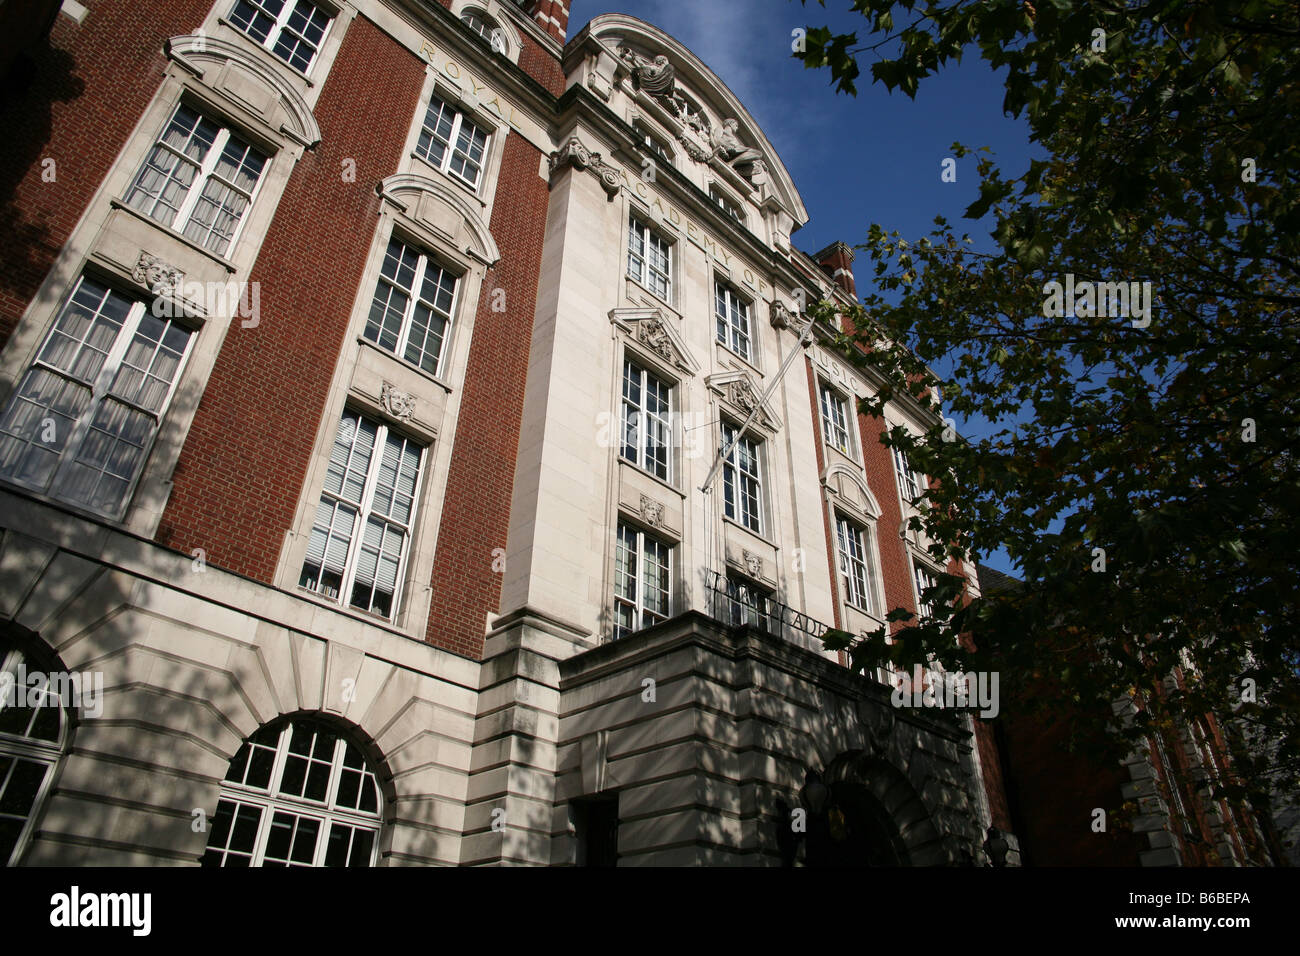 Royal Academy of Music, London Stock Photo